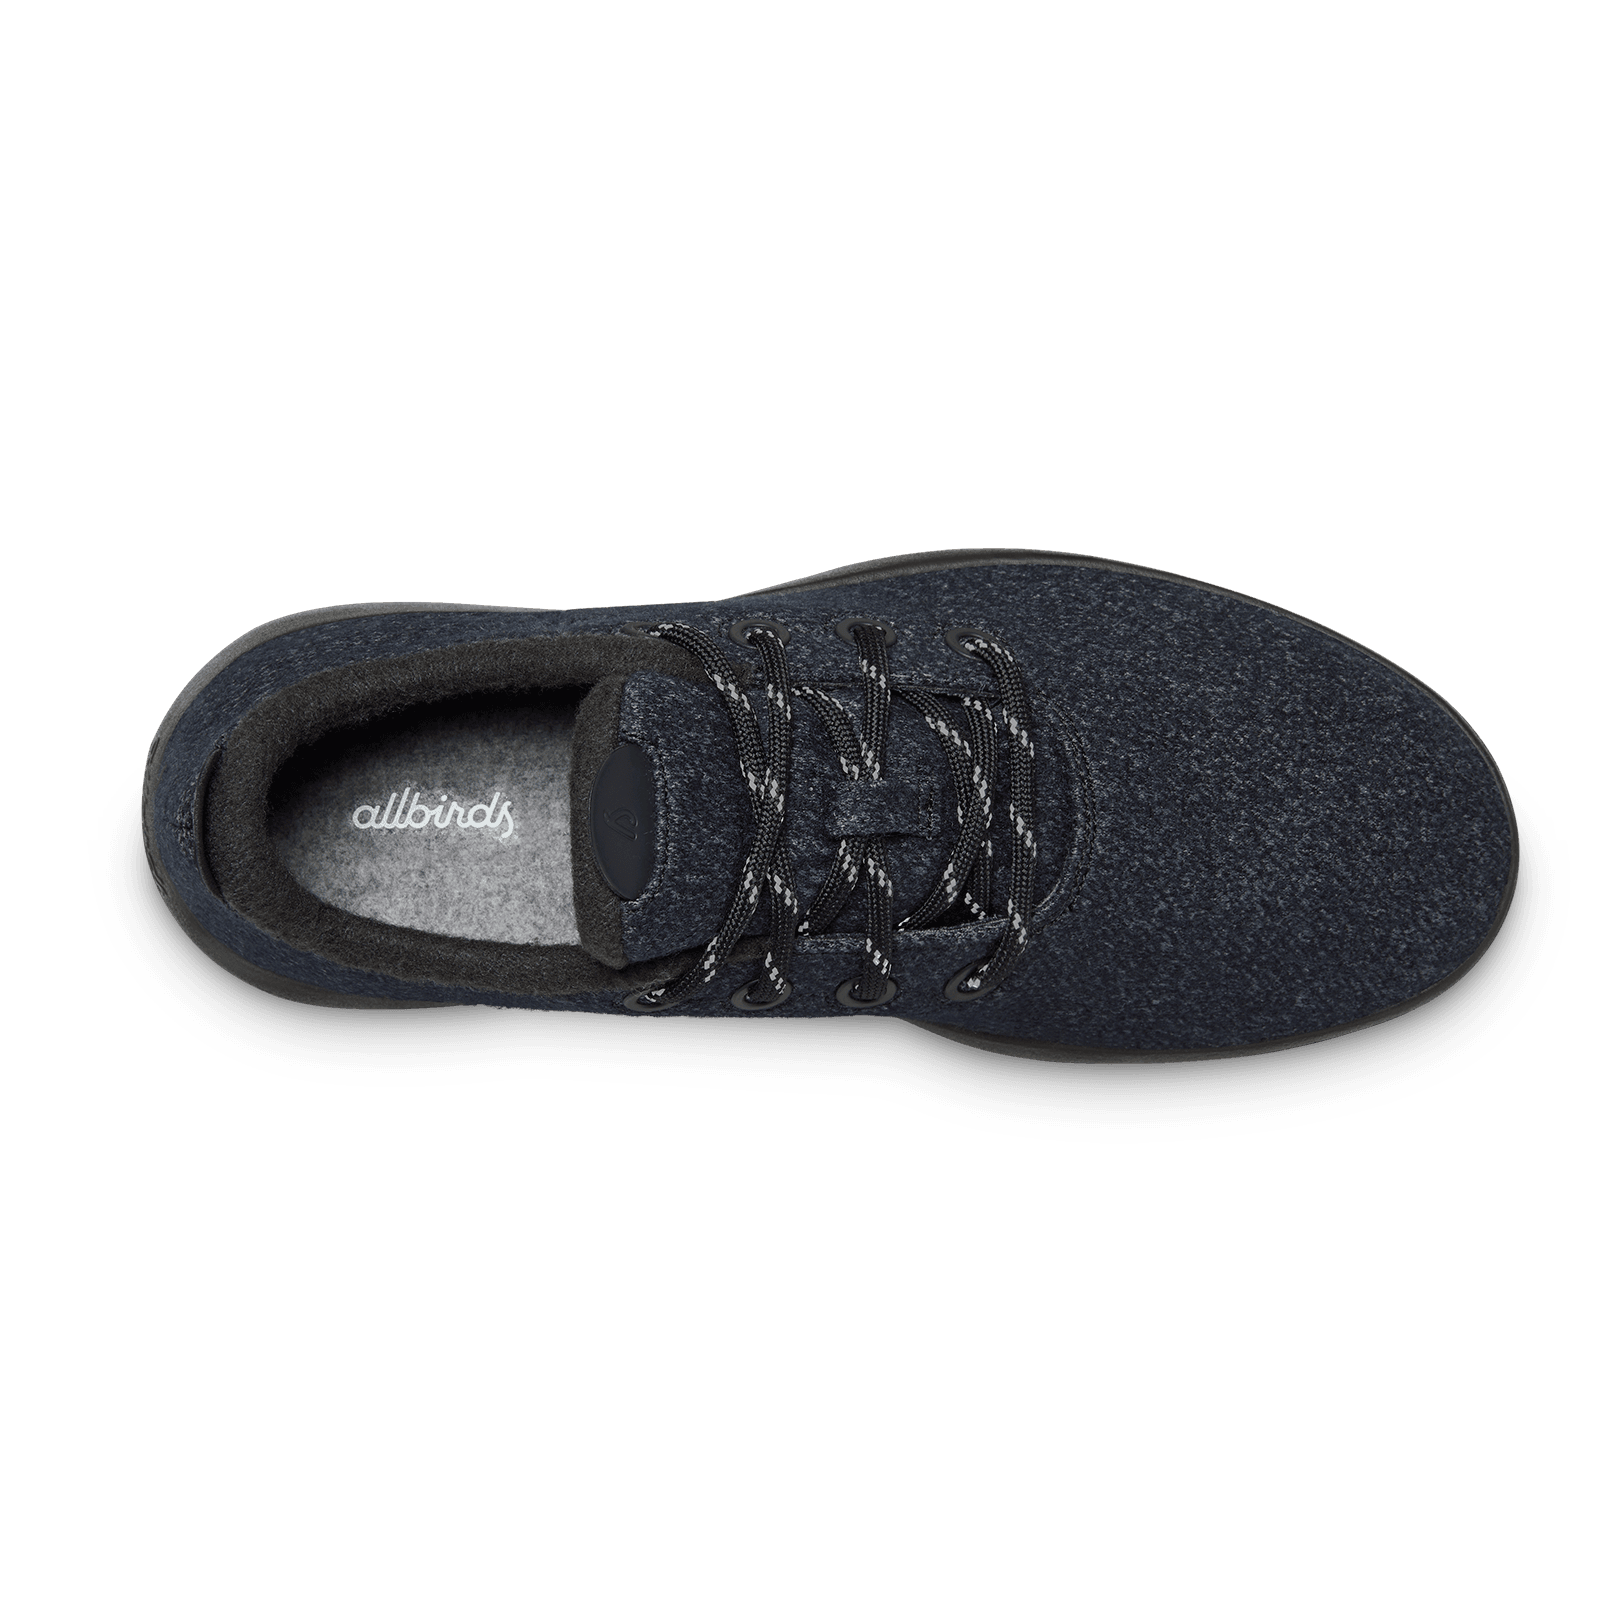 Allbirds Wool Runner Mizzles WRM Grey Shoes Women's Size 8